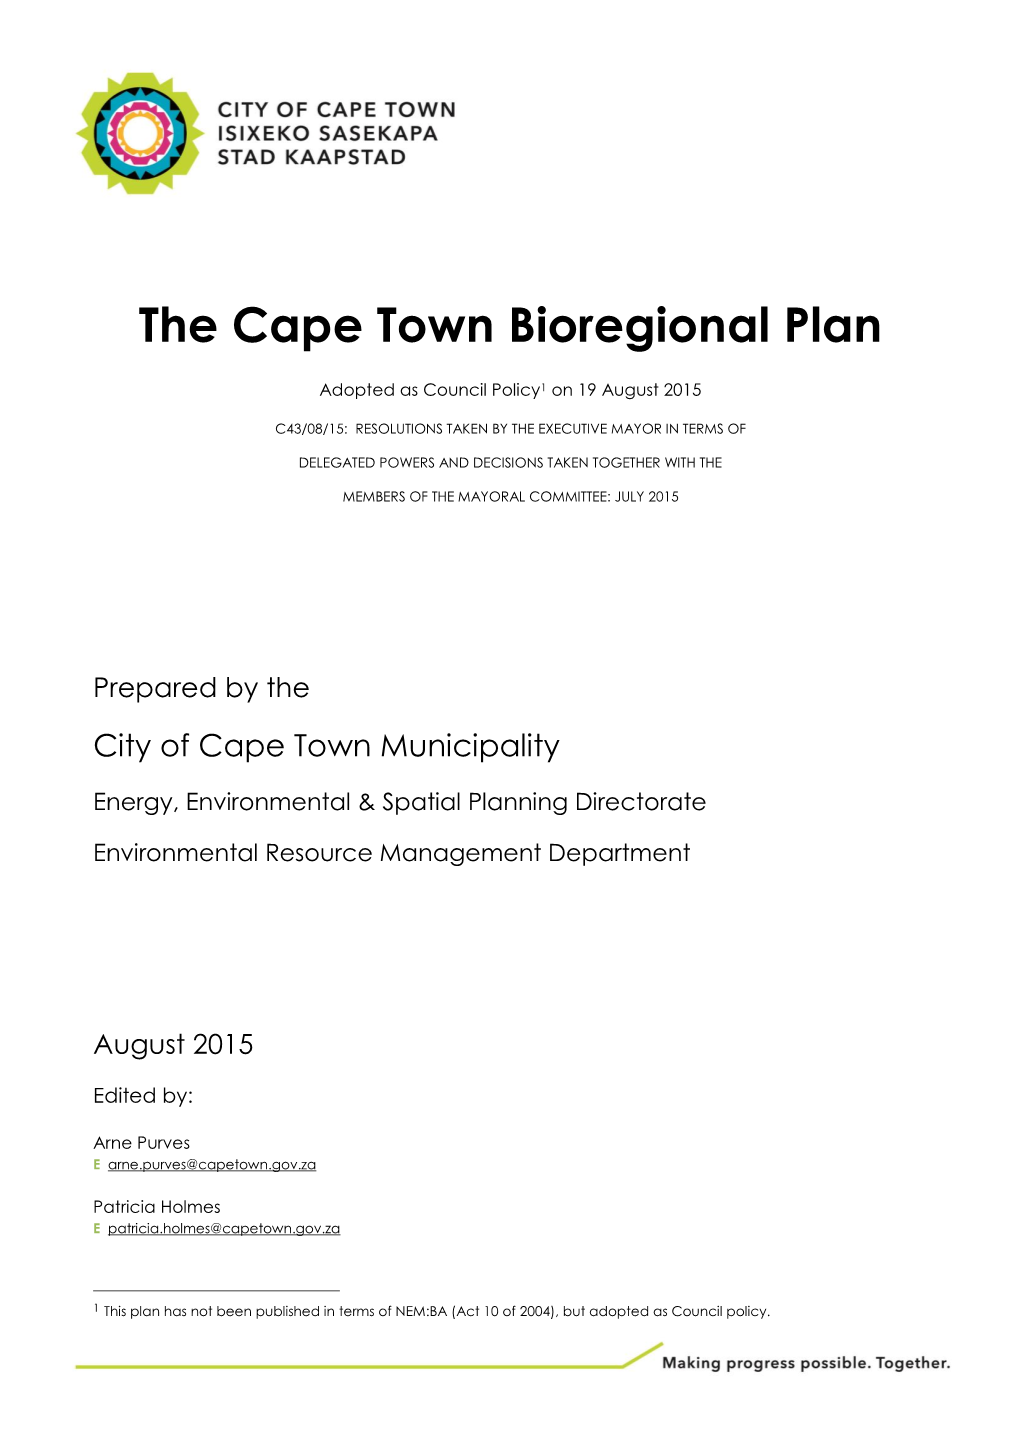 The Cape Town Bioregional Plan